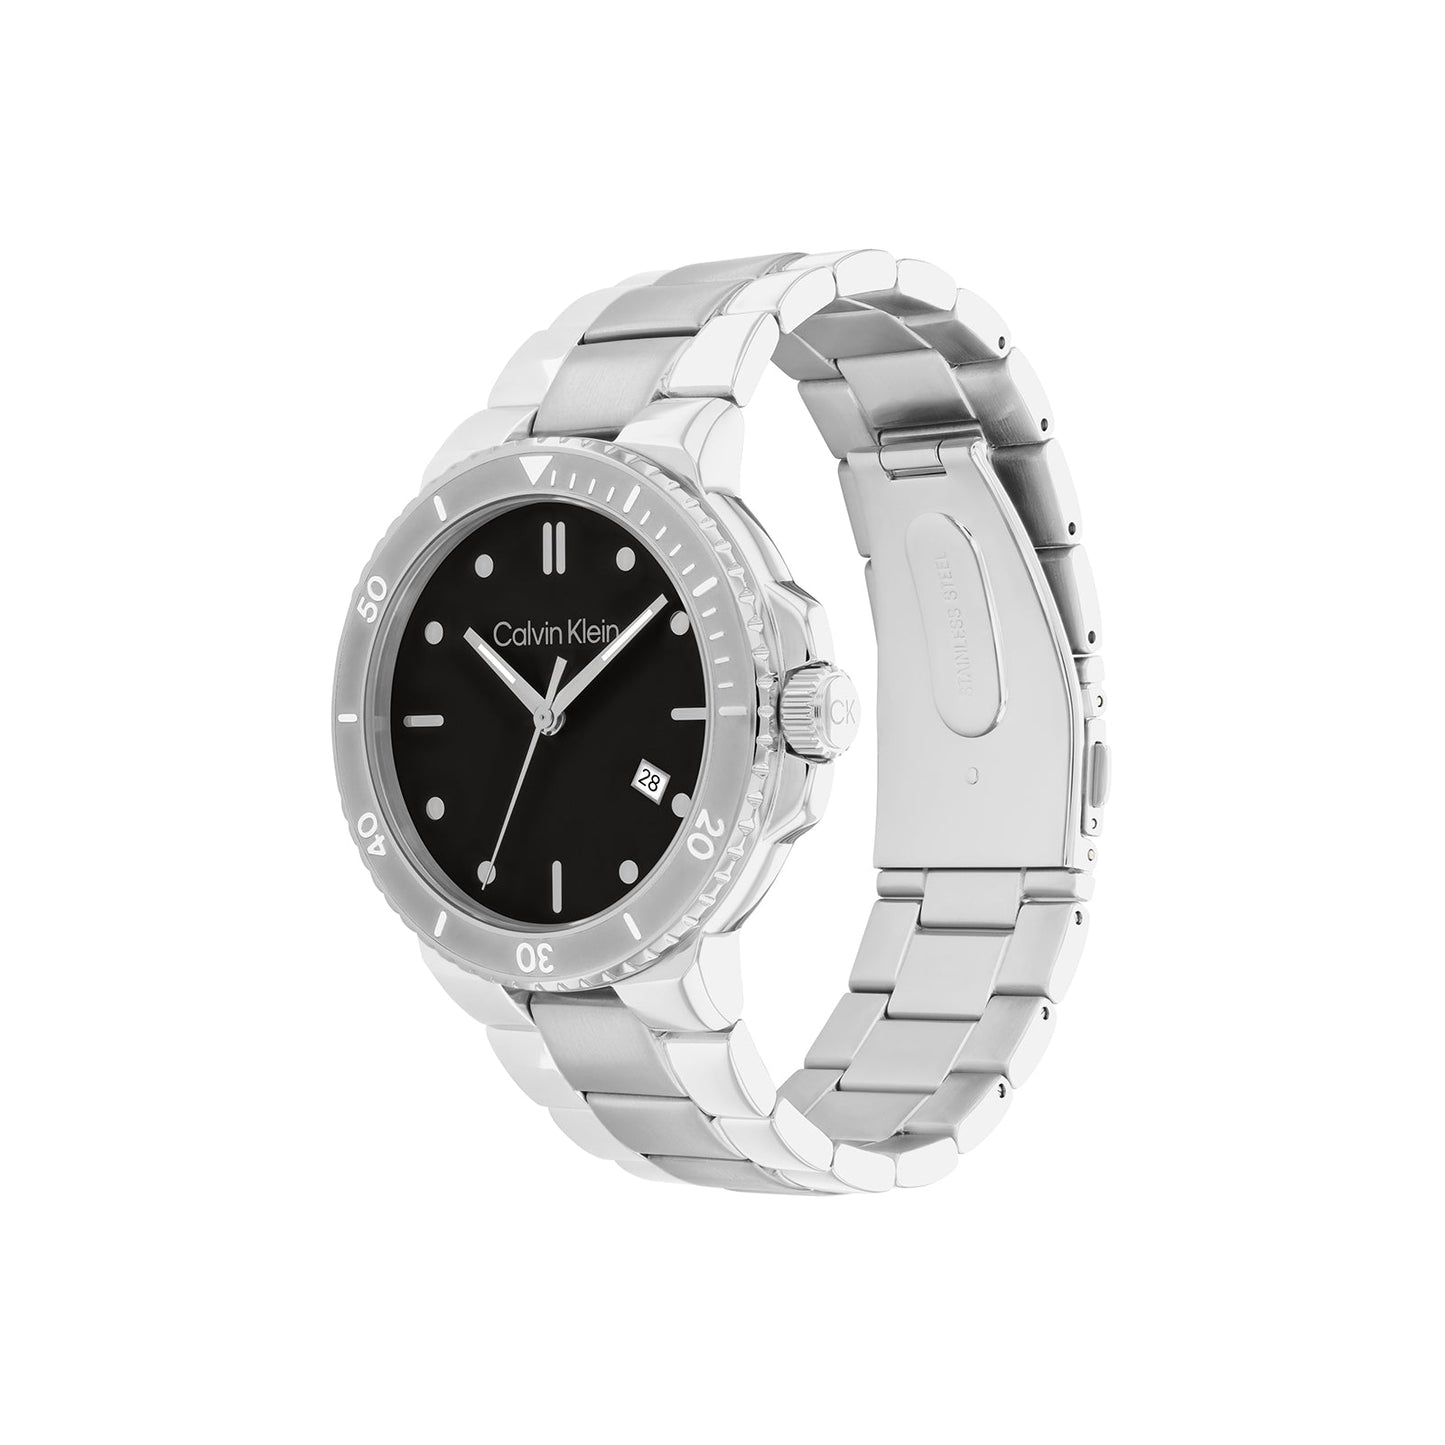 Calvin Klein 25200203 Men's Steel Watch